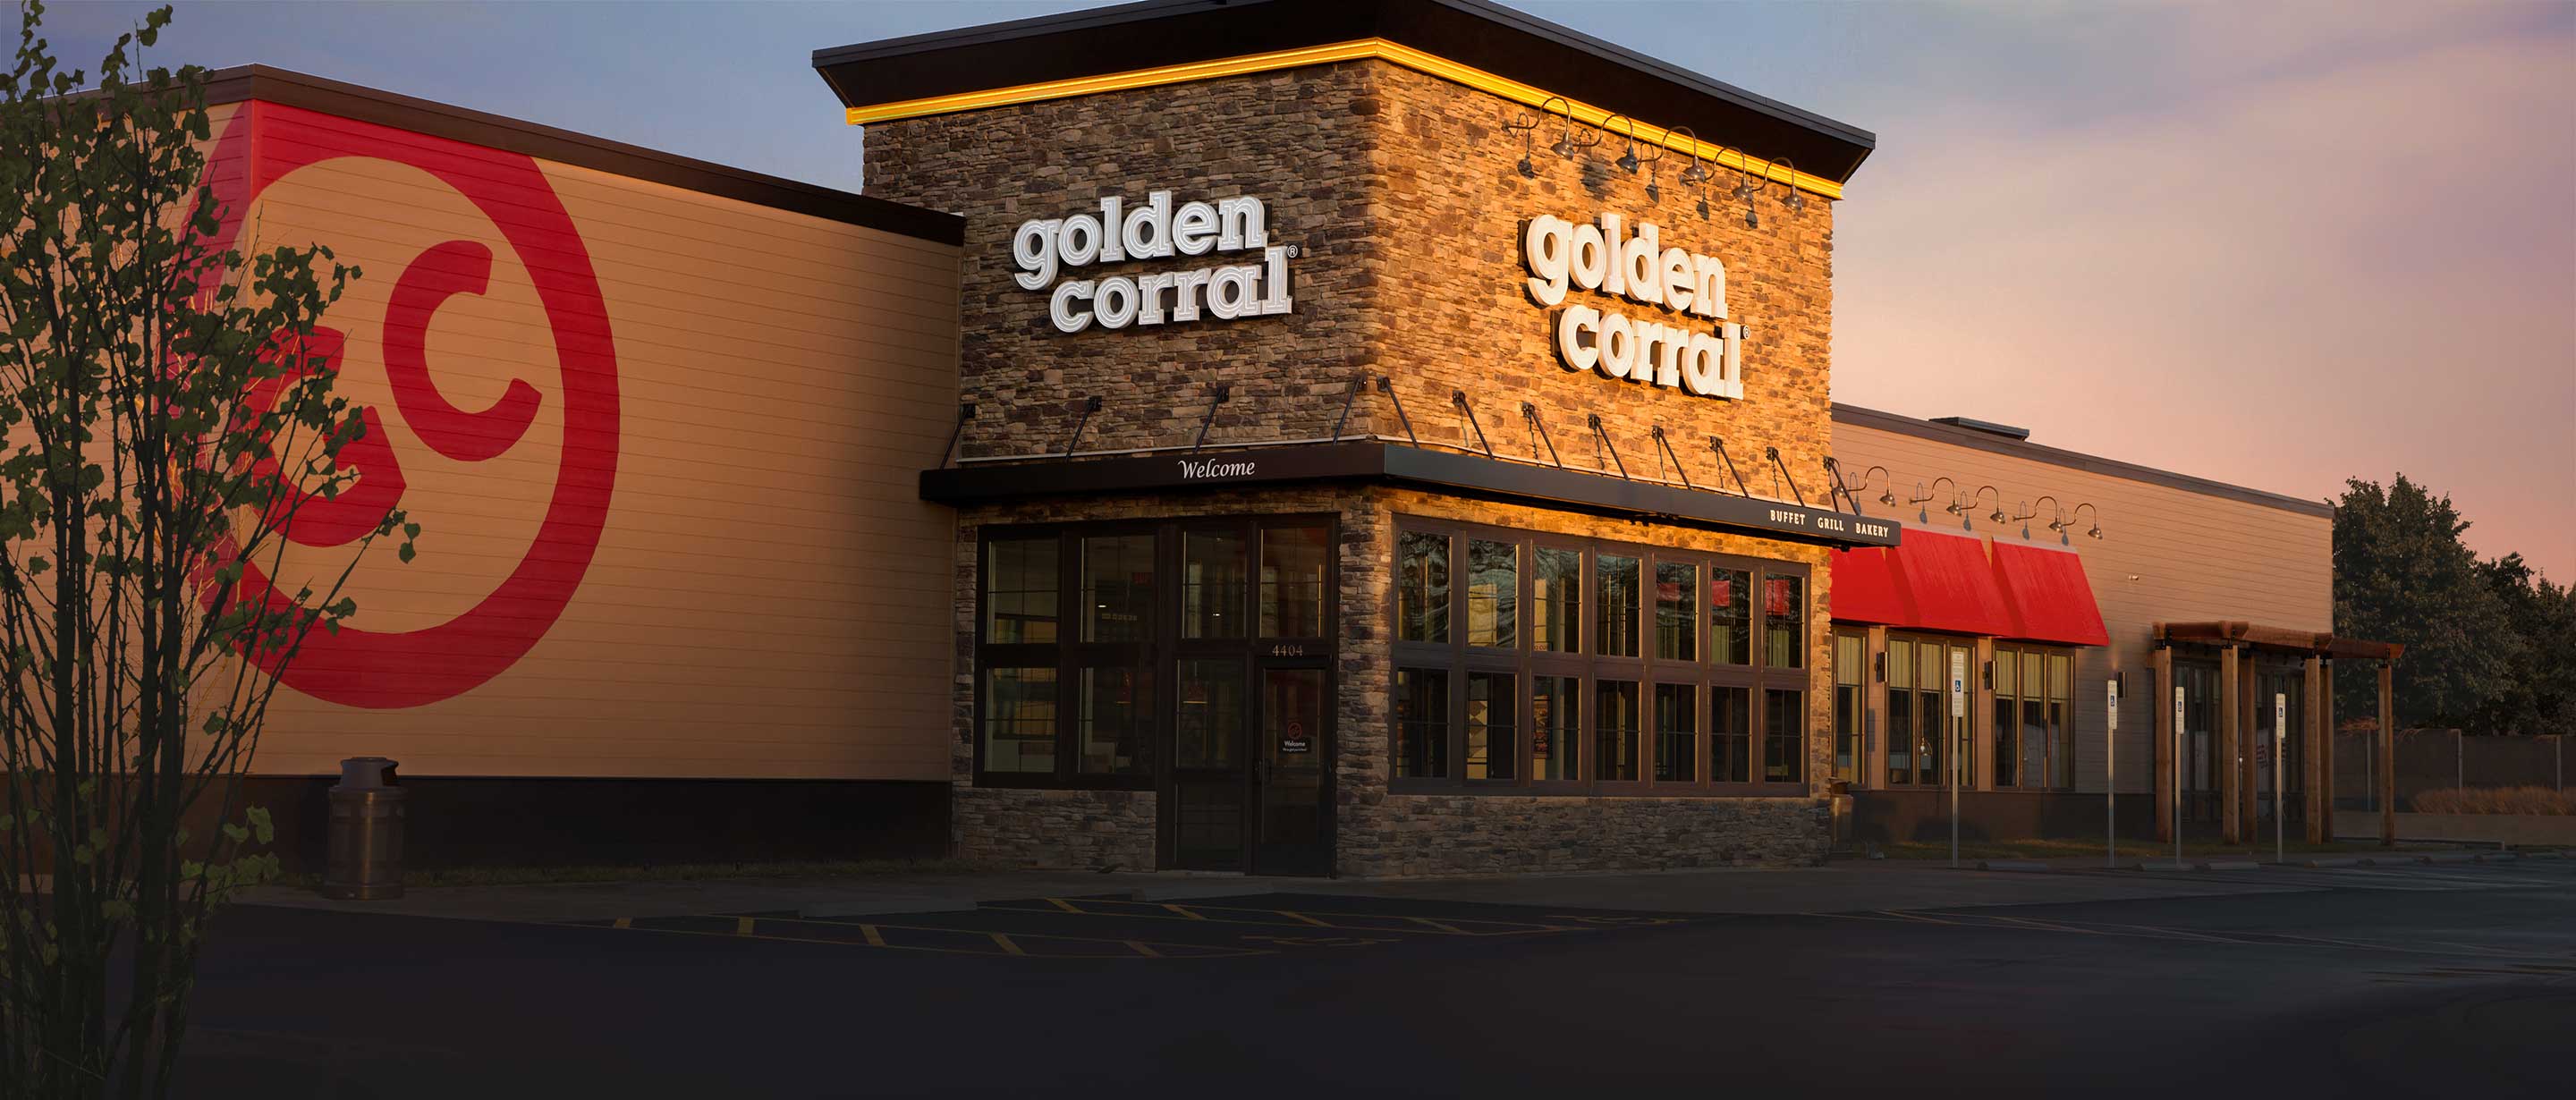 Golden Corral Building 